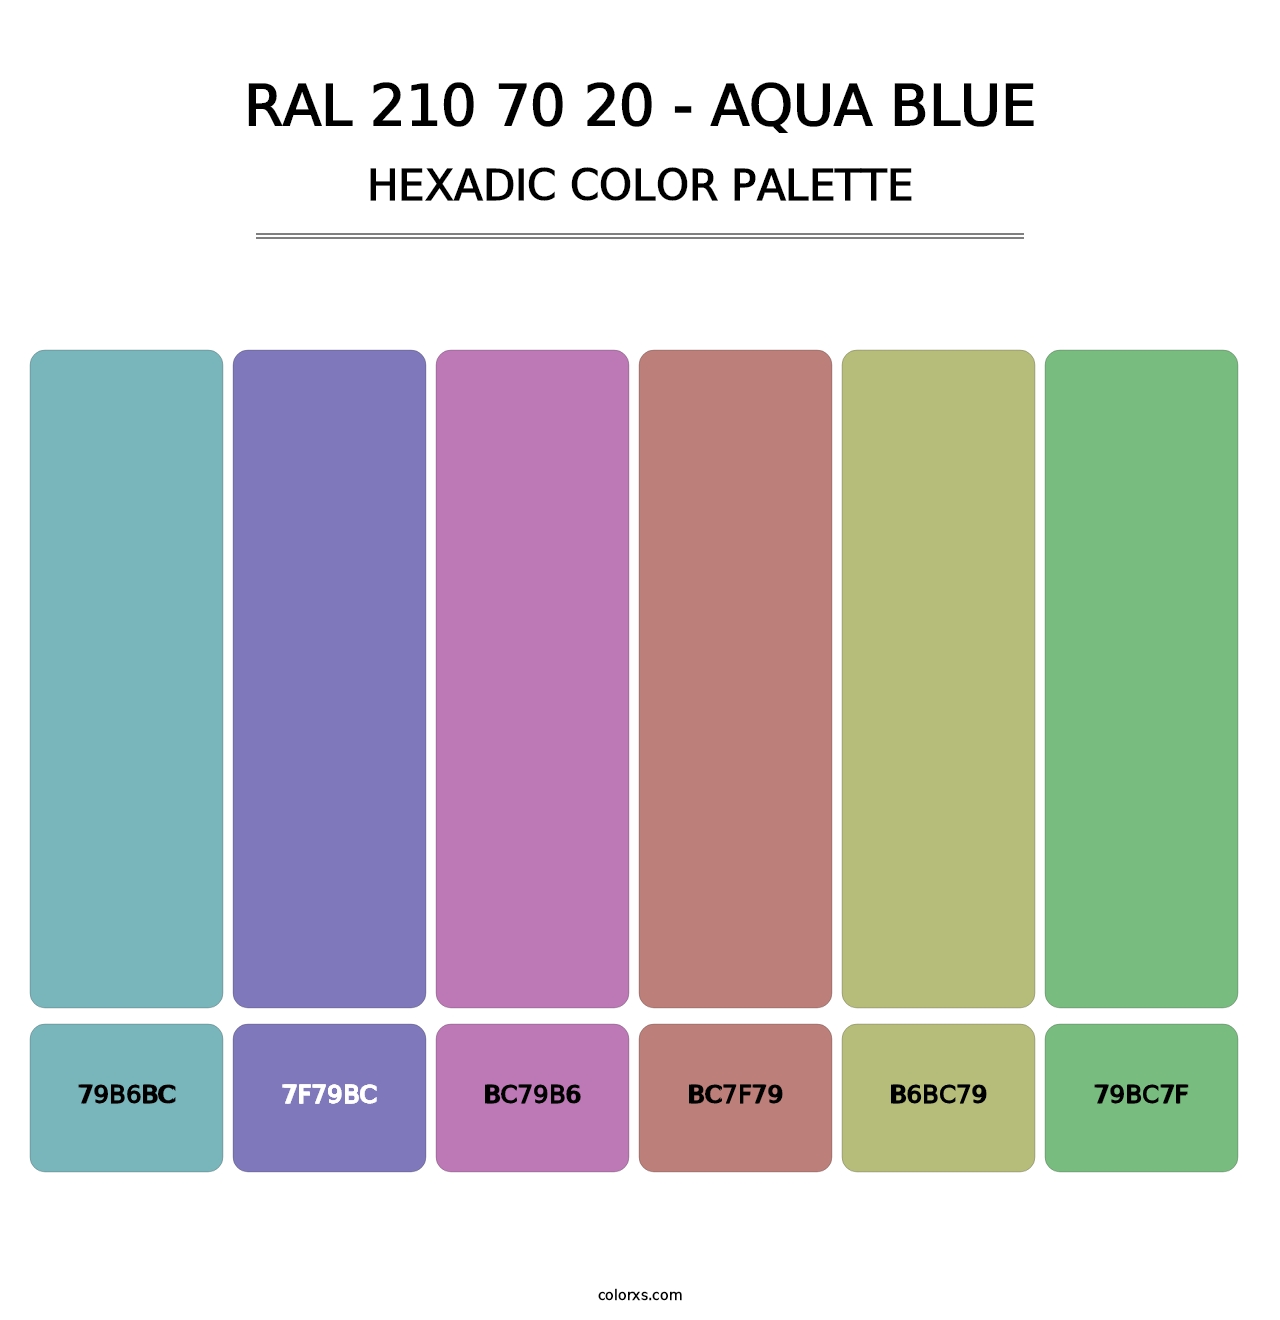 RAL 210 70 20 - Aqua Blue - Hexadic Color Palette